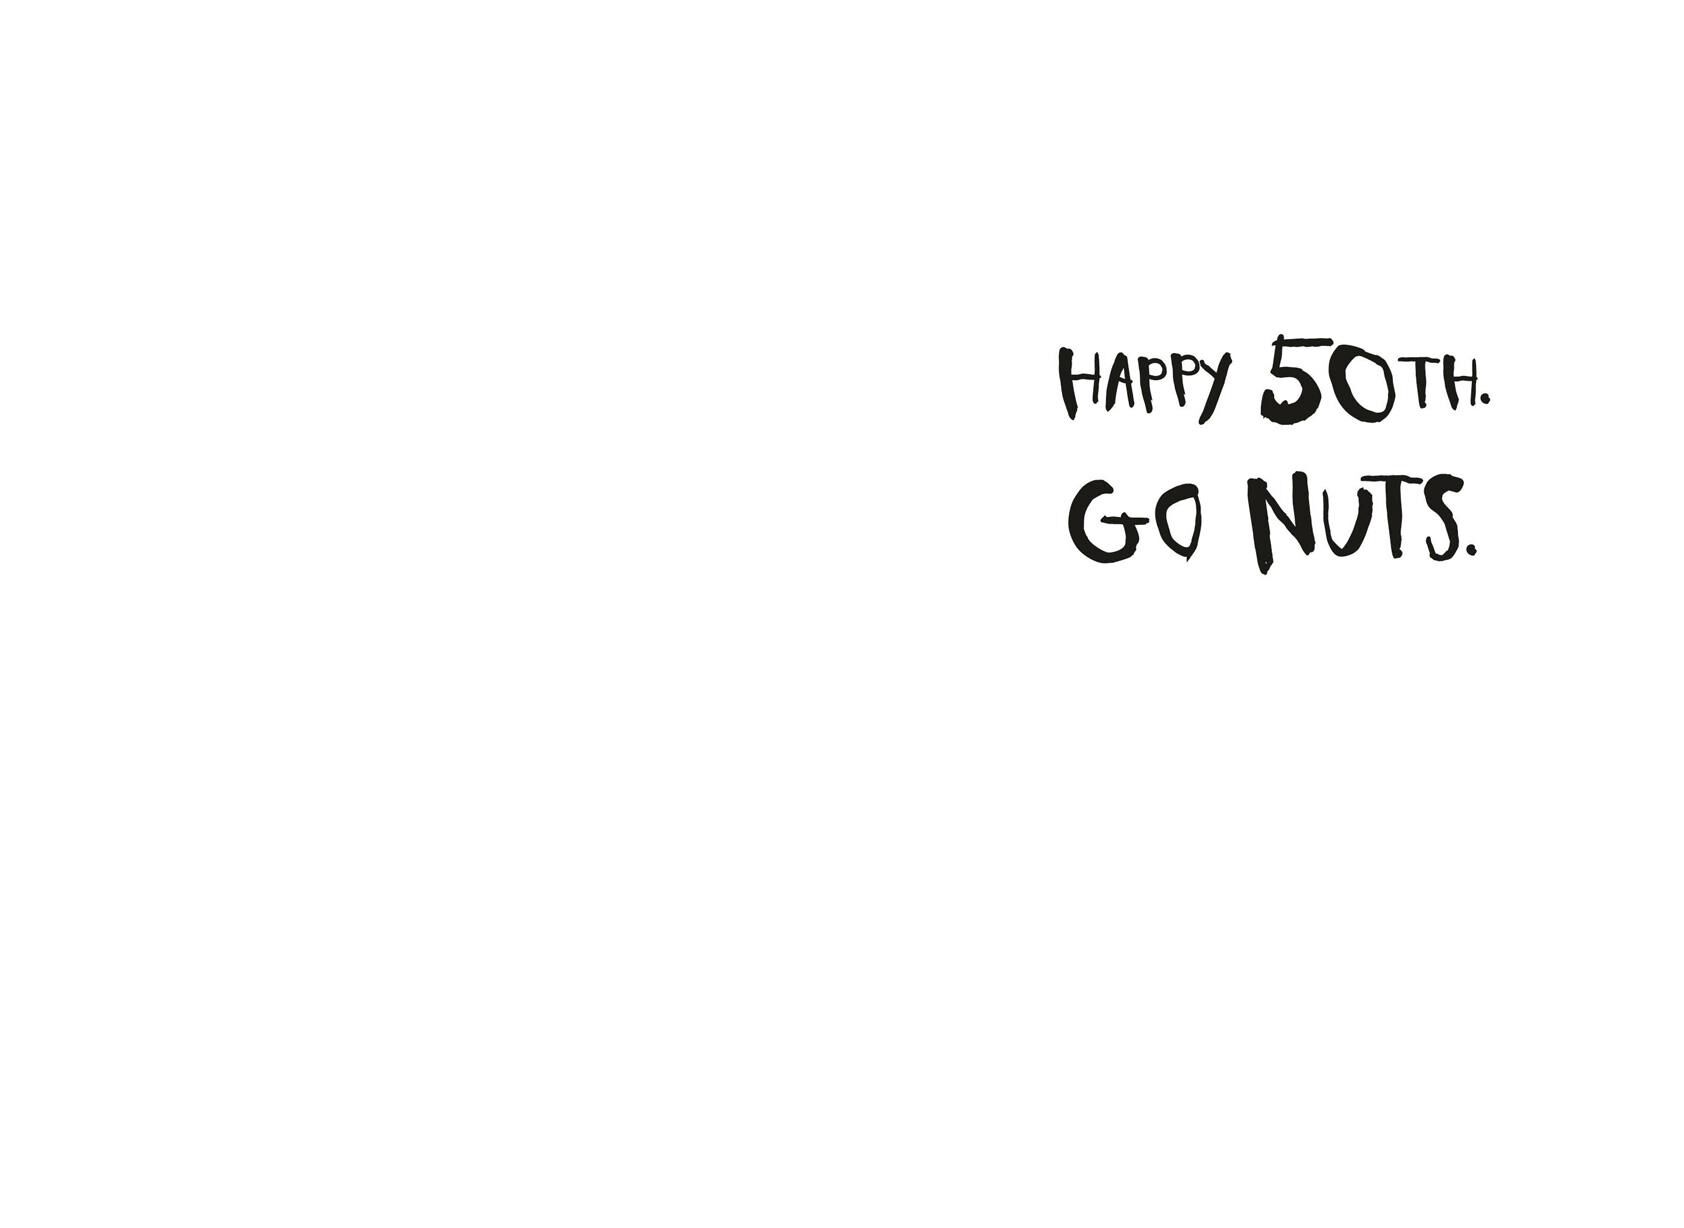 Go Nuts Funny 50th Birthday Card - Greeting Cards - Hallmark1684 x 1228